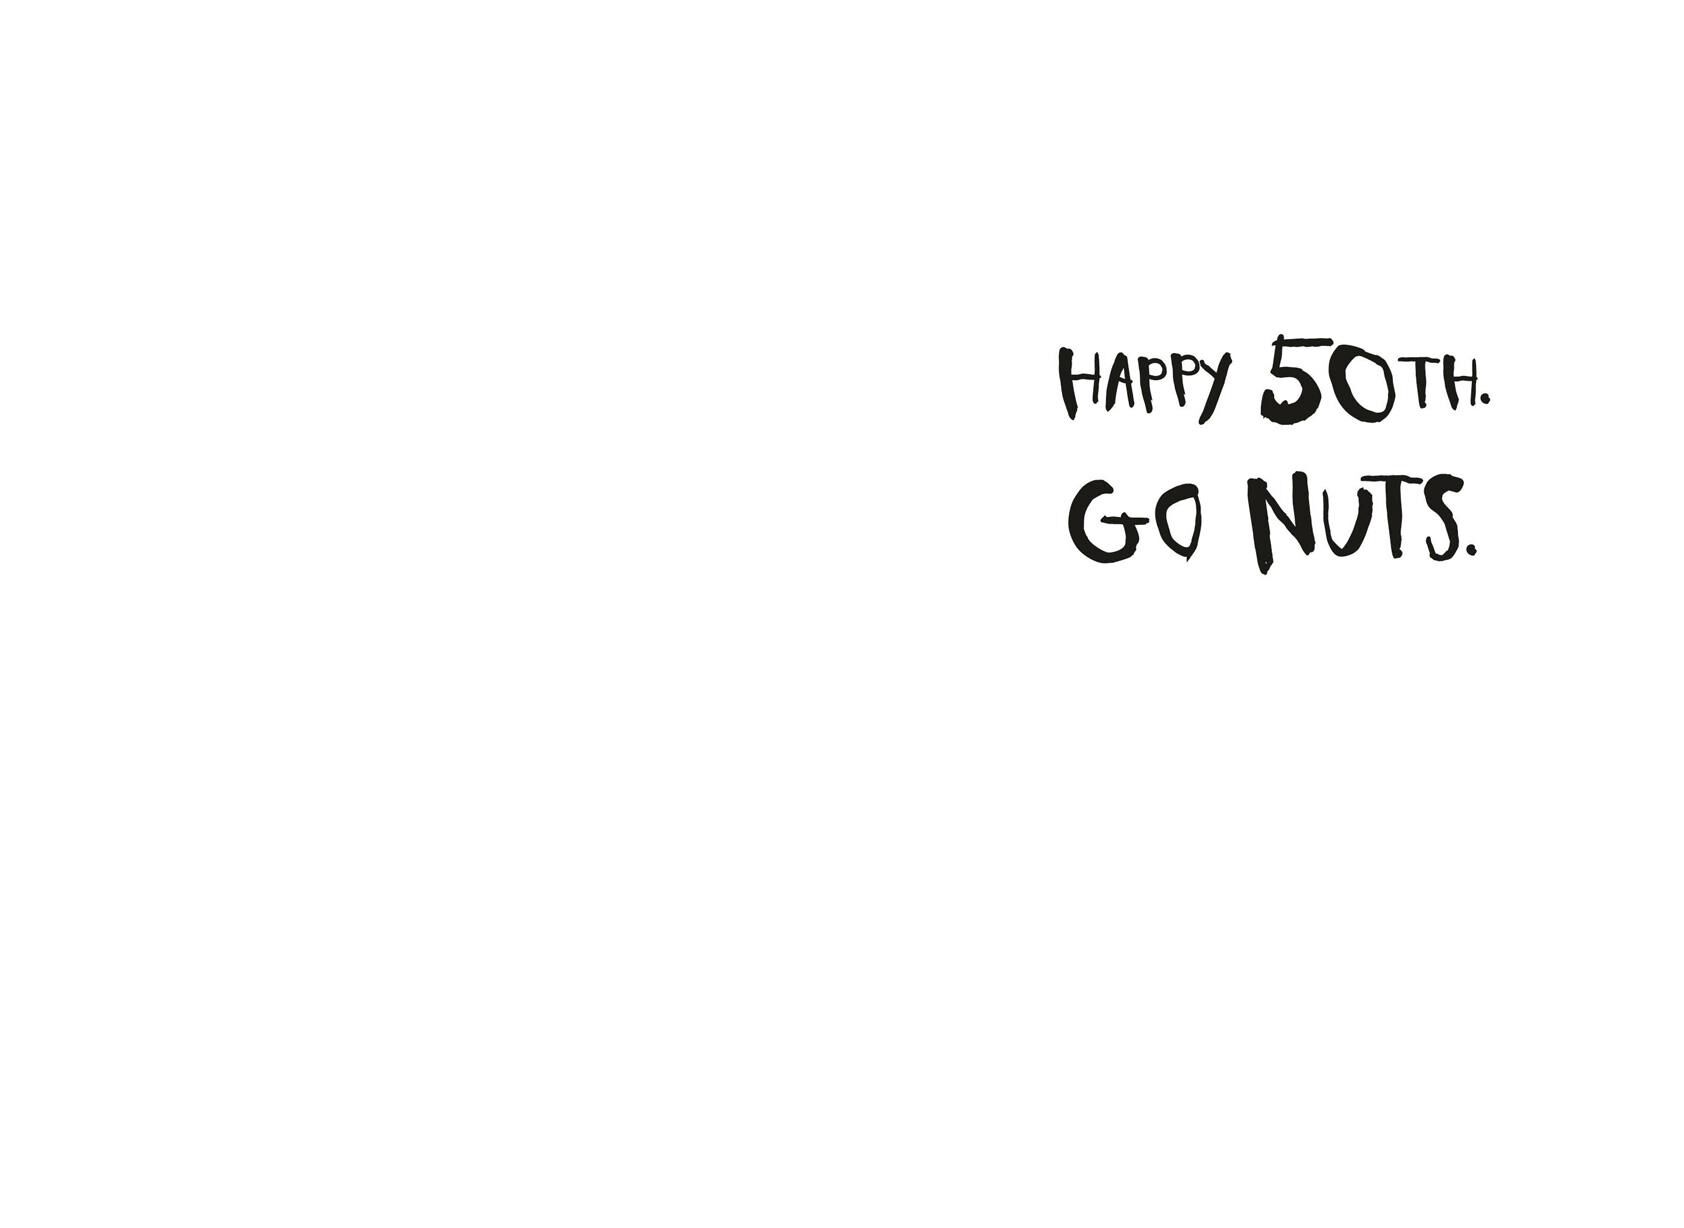 Go Nuts Funny 50th Birthday Card - Greeting Cards - Hallmark1684 x 1228